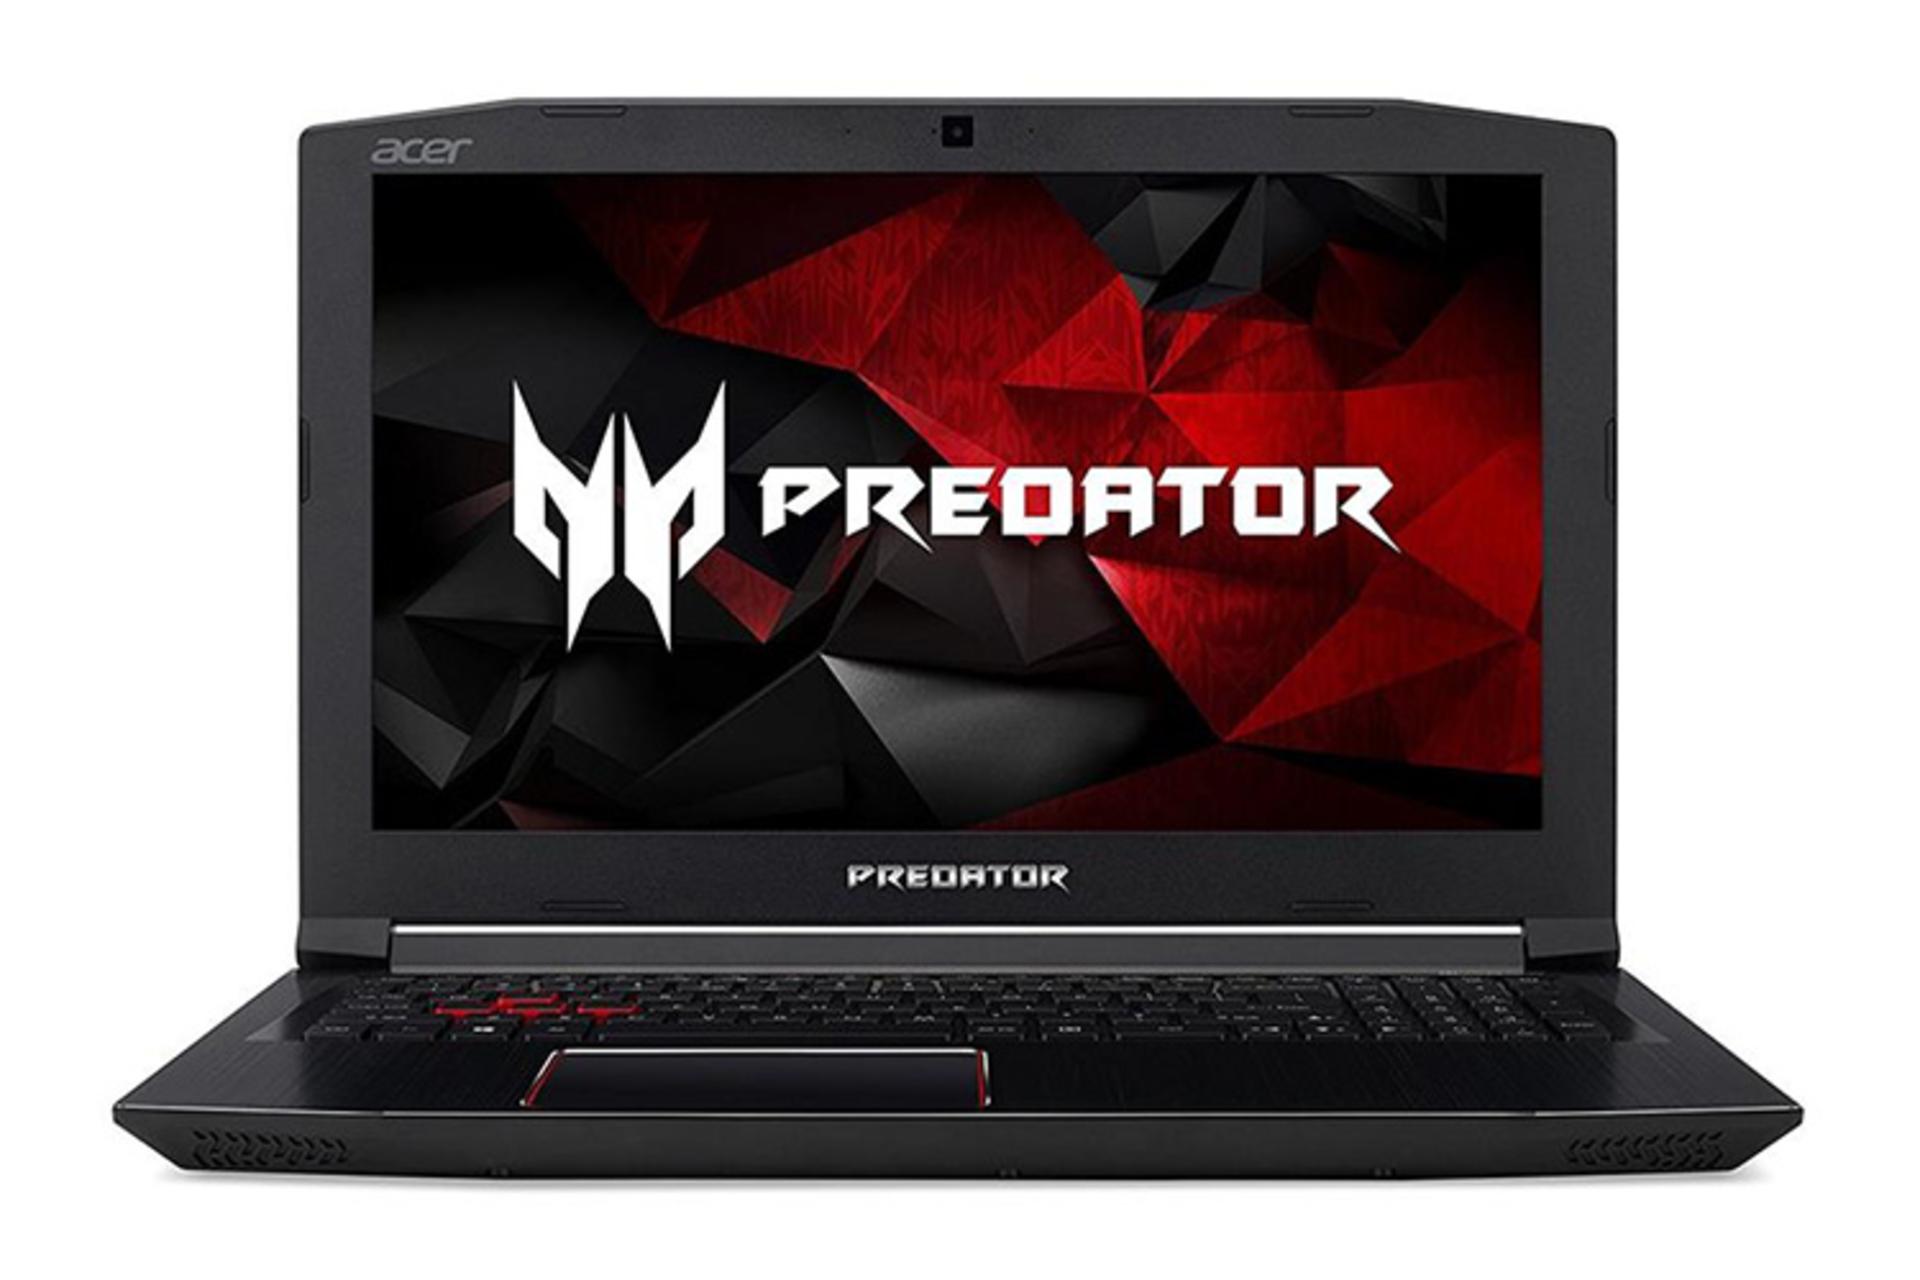 Acer Predator 15 G3-572 / ایسر پریدیتور